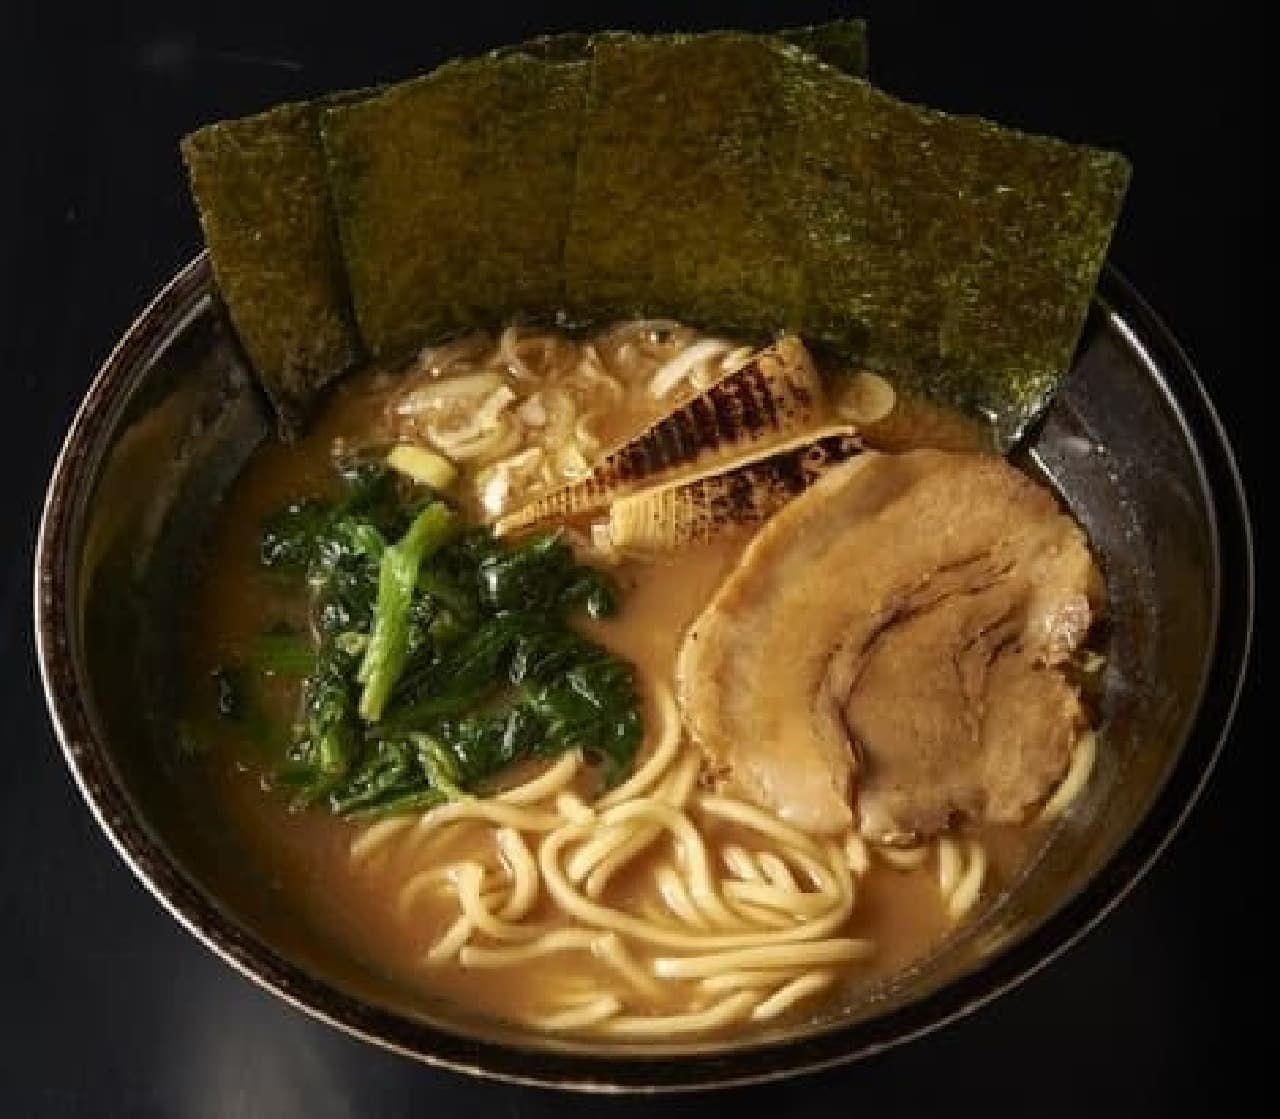 Enjoy the special "evolutionary" tonkotsu soy sauce soup!